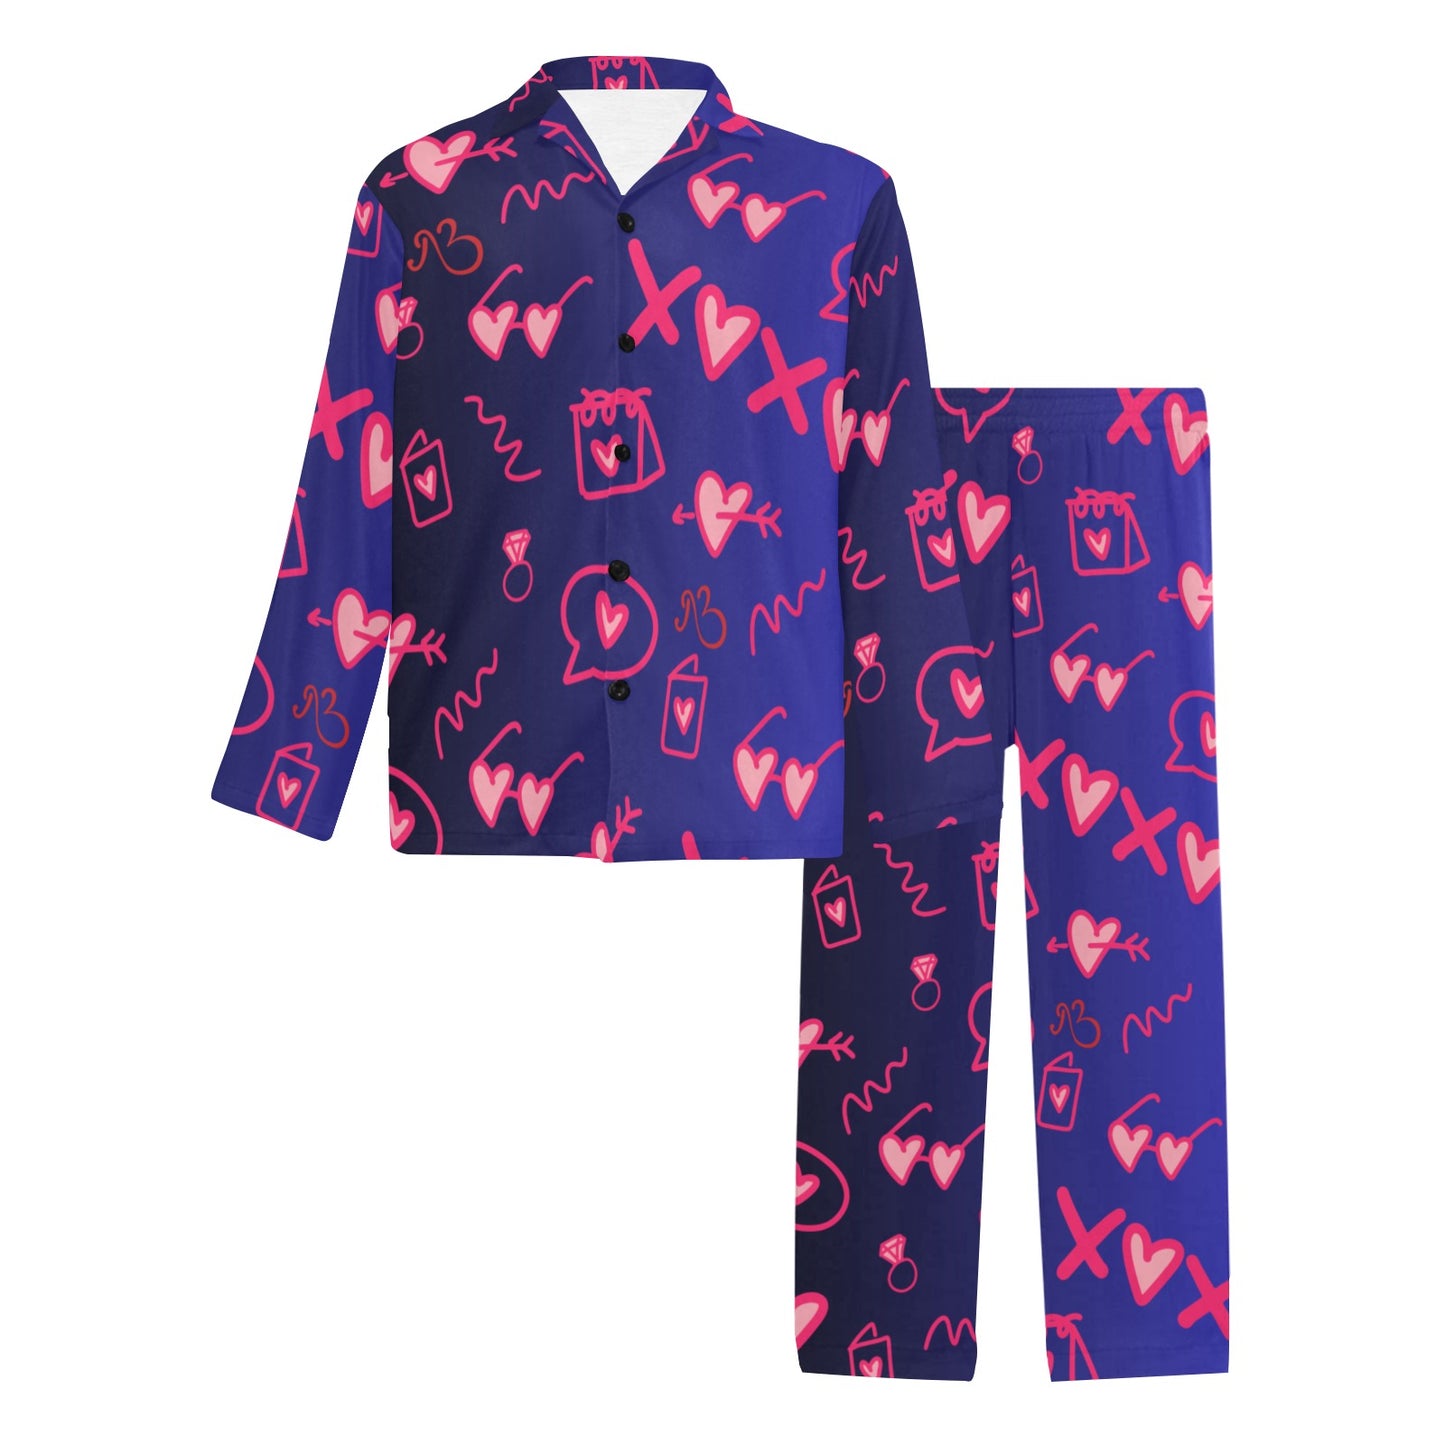 Love Heart XOXO Men's Long Sleeve Pyjamas Set